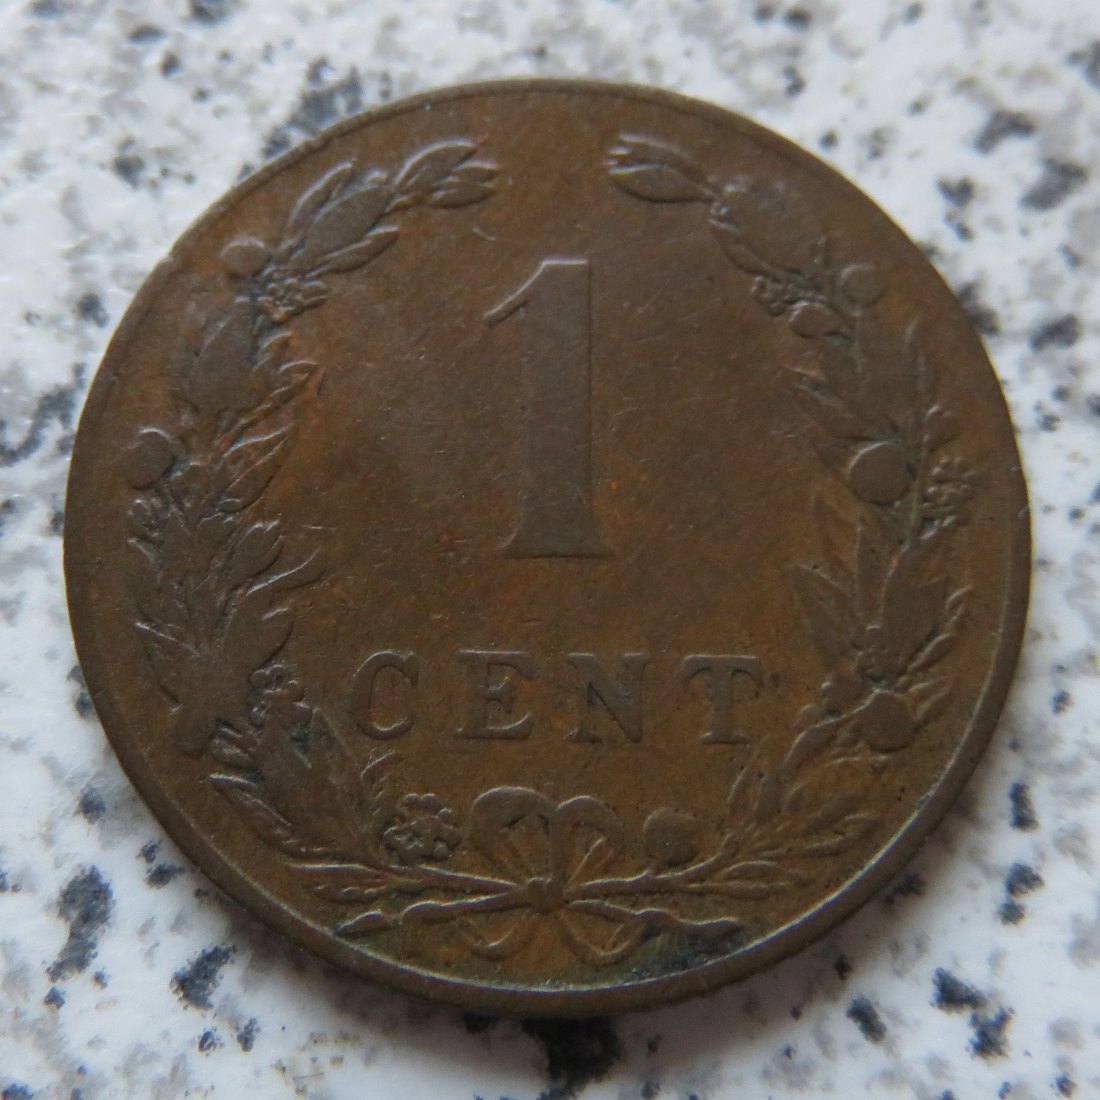  Niederlande 1 Cent 1902   